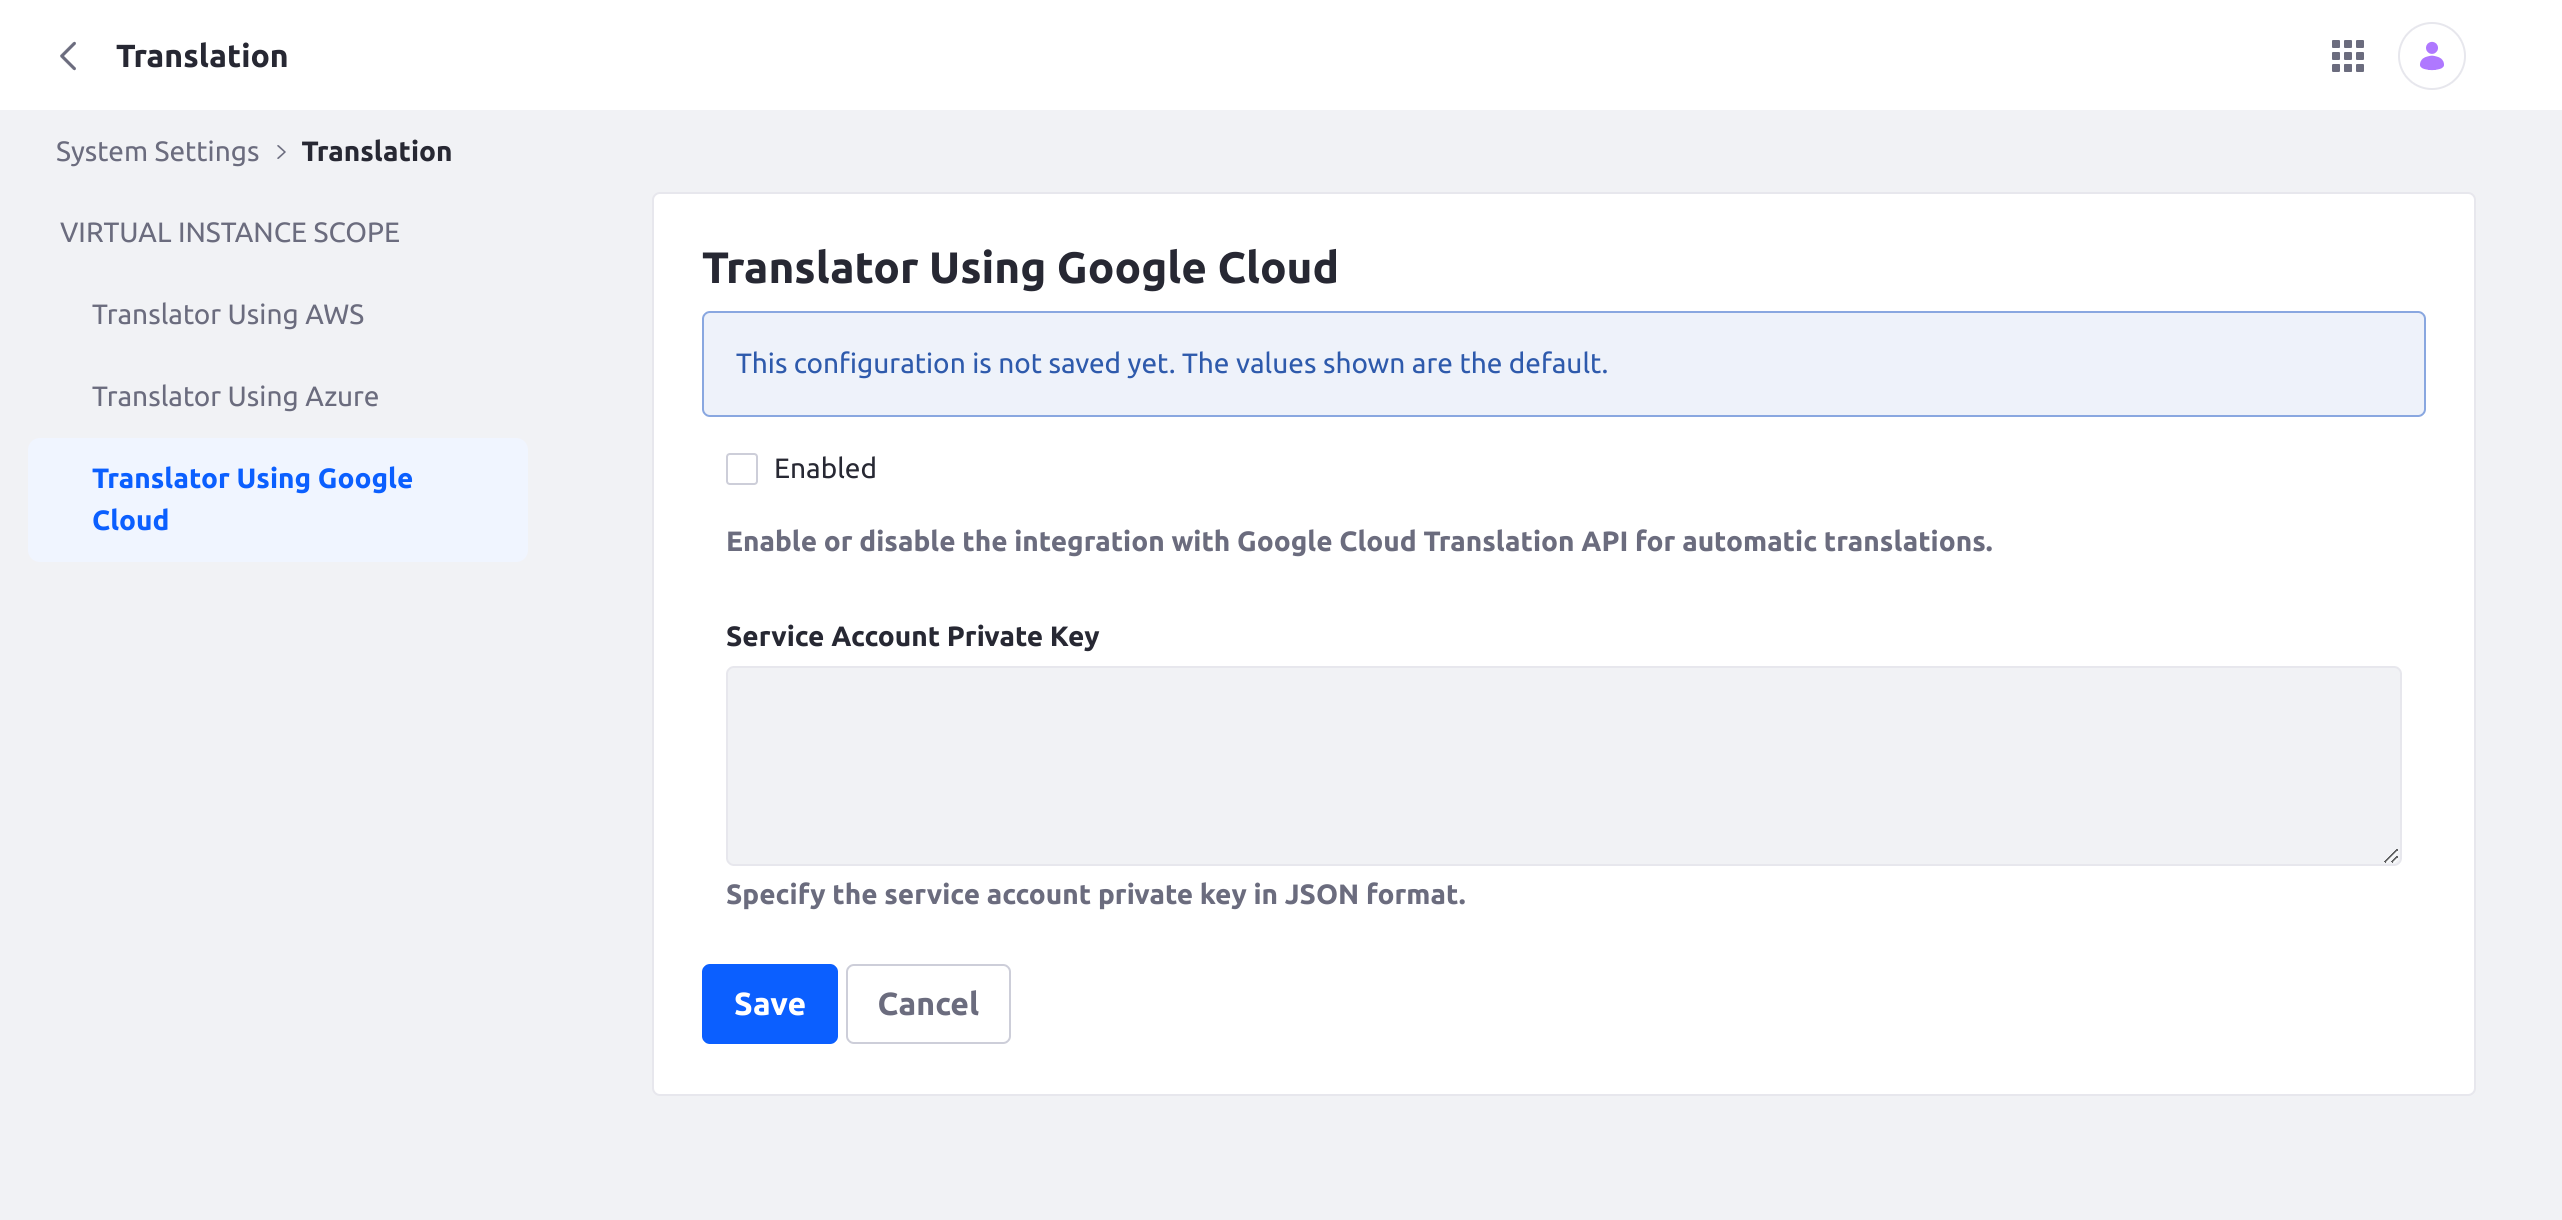 Translator Using Google Cloudへ移動します。